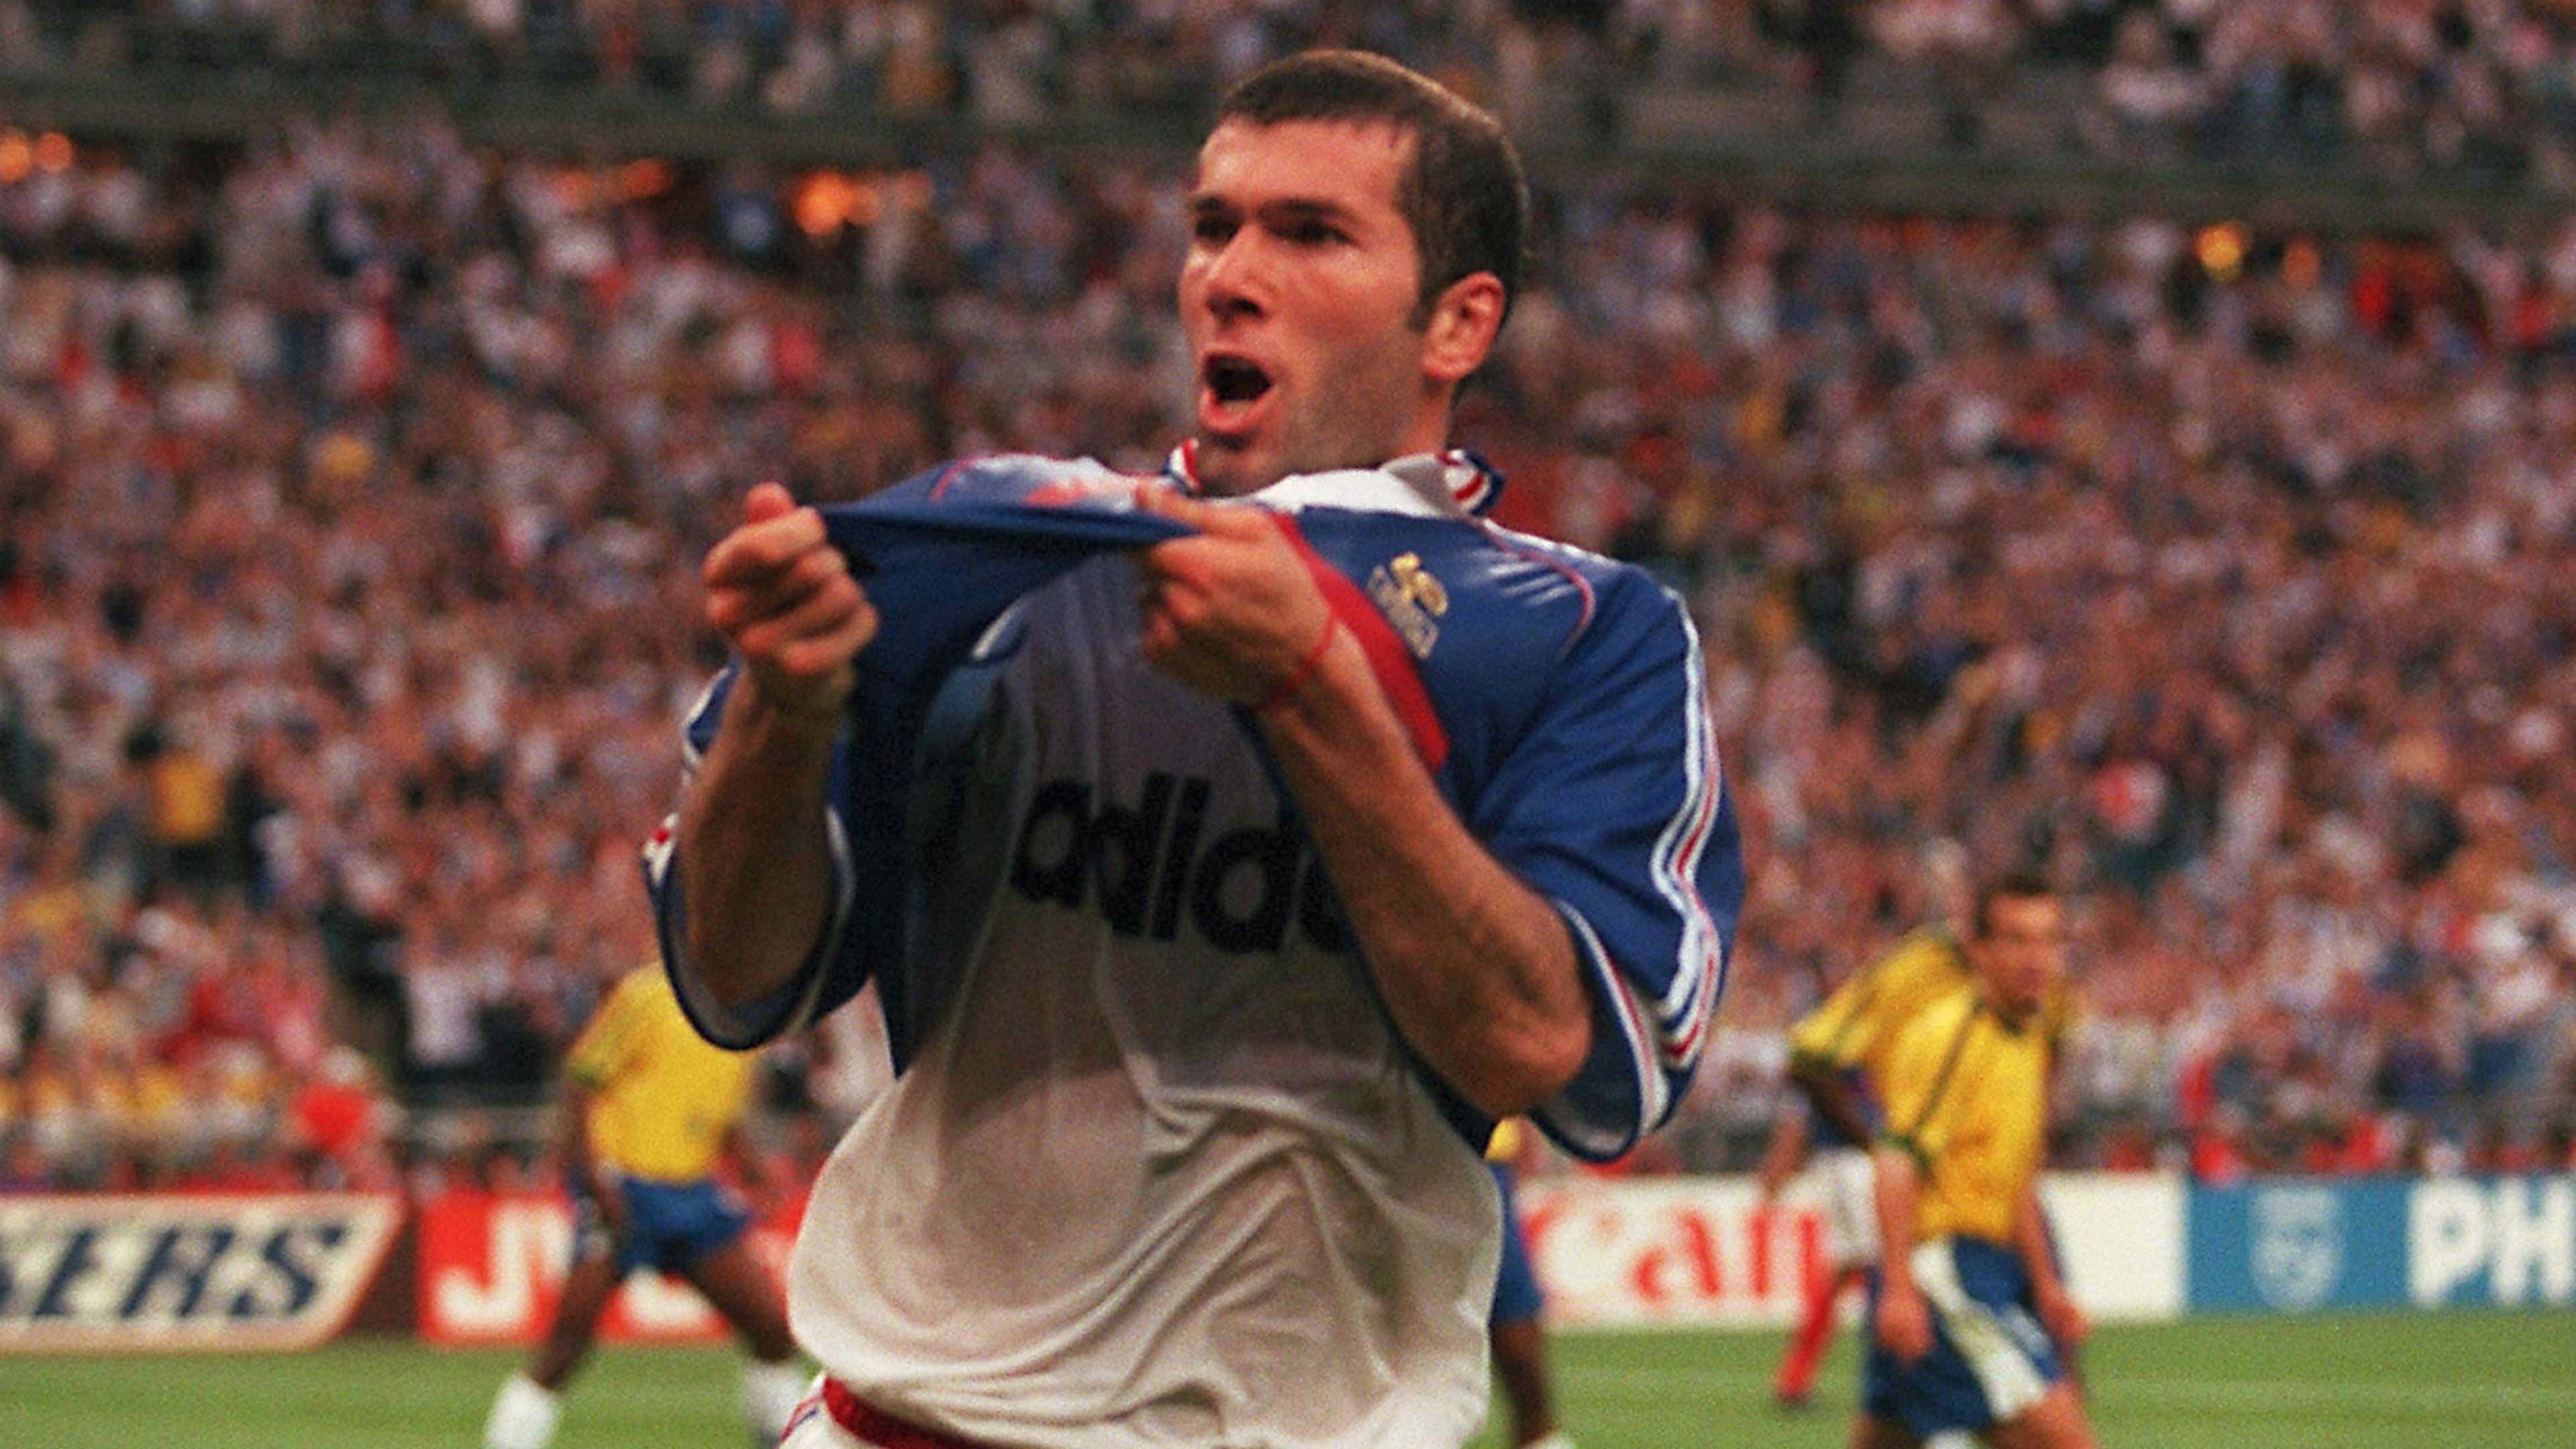 FIFA 20: Zinedine Zidane icon card rating revealed but how does he